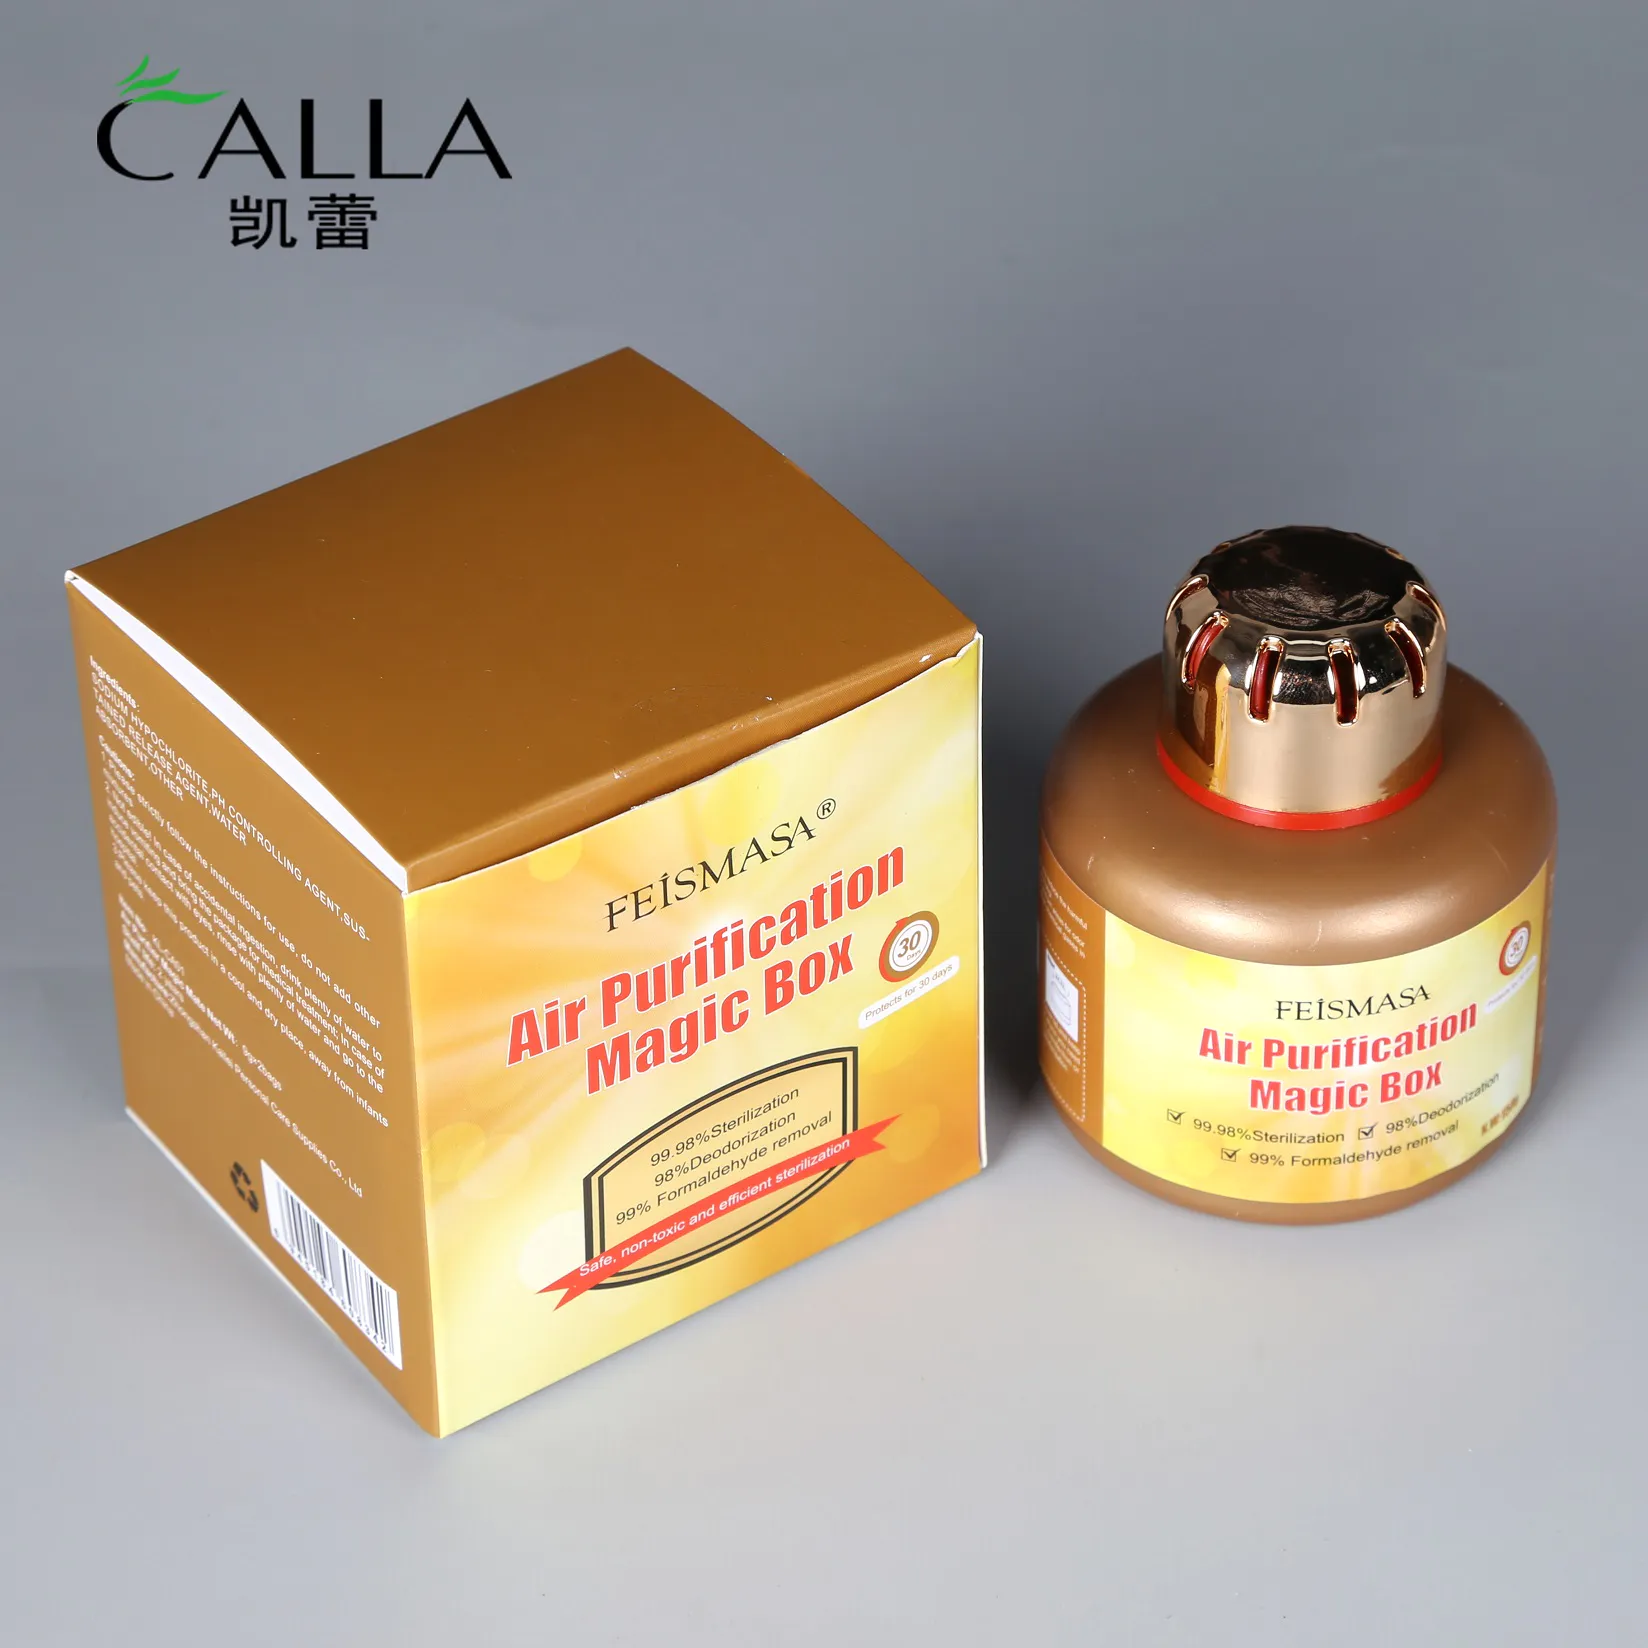 FEISMASA Air Doctor Chlorine Dioxide Deodorization Removal Air Purifier Remove Formaldehyde Magic Box